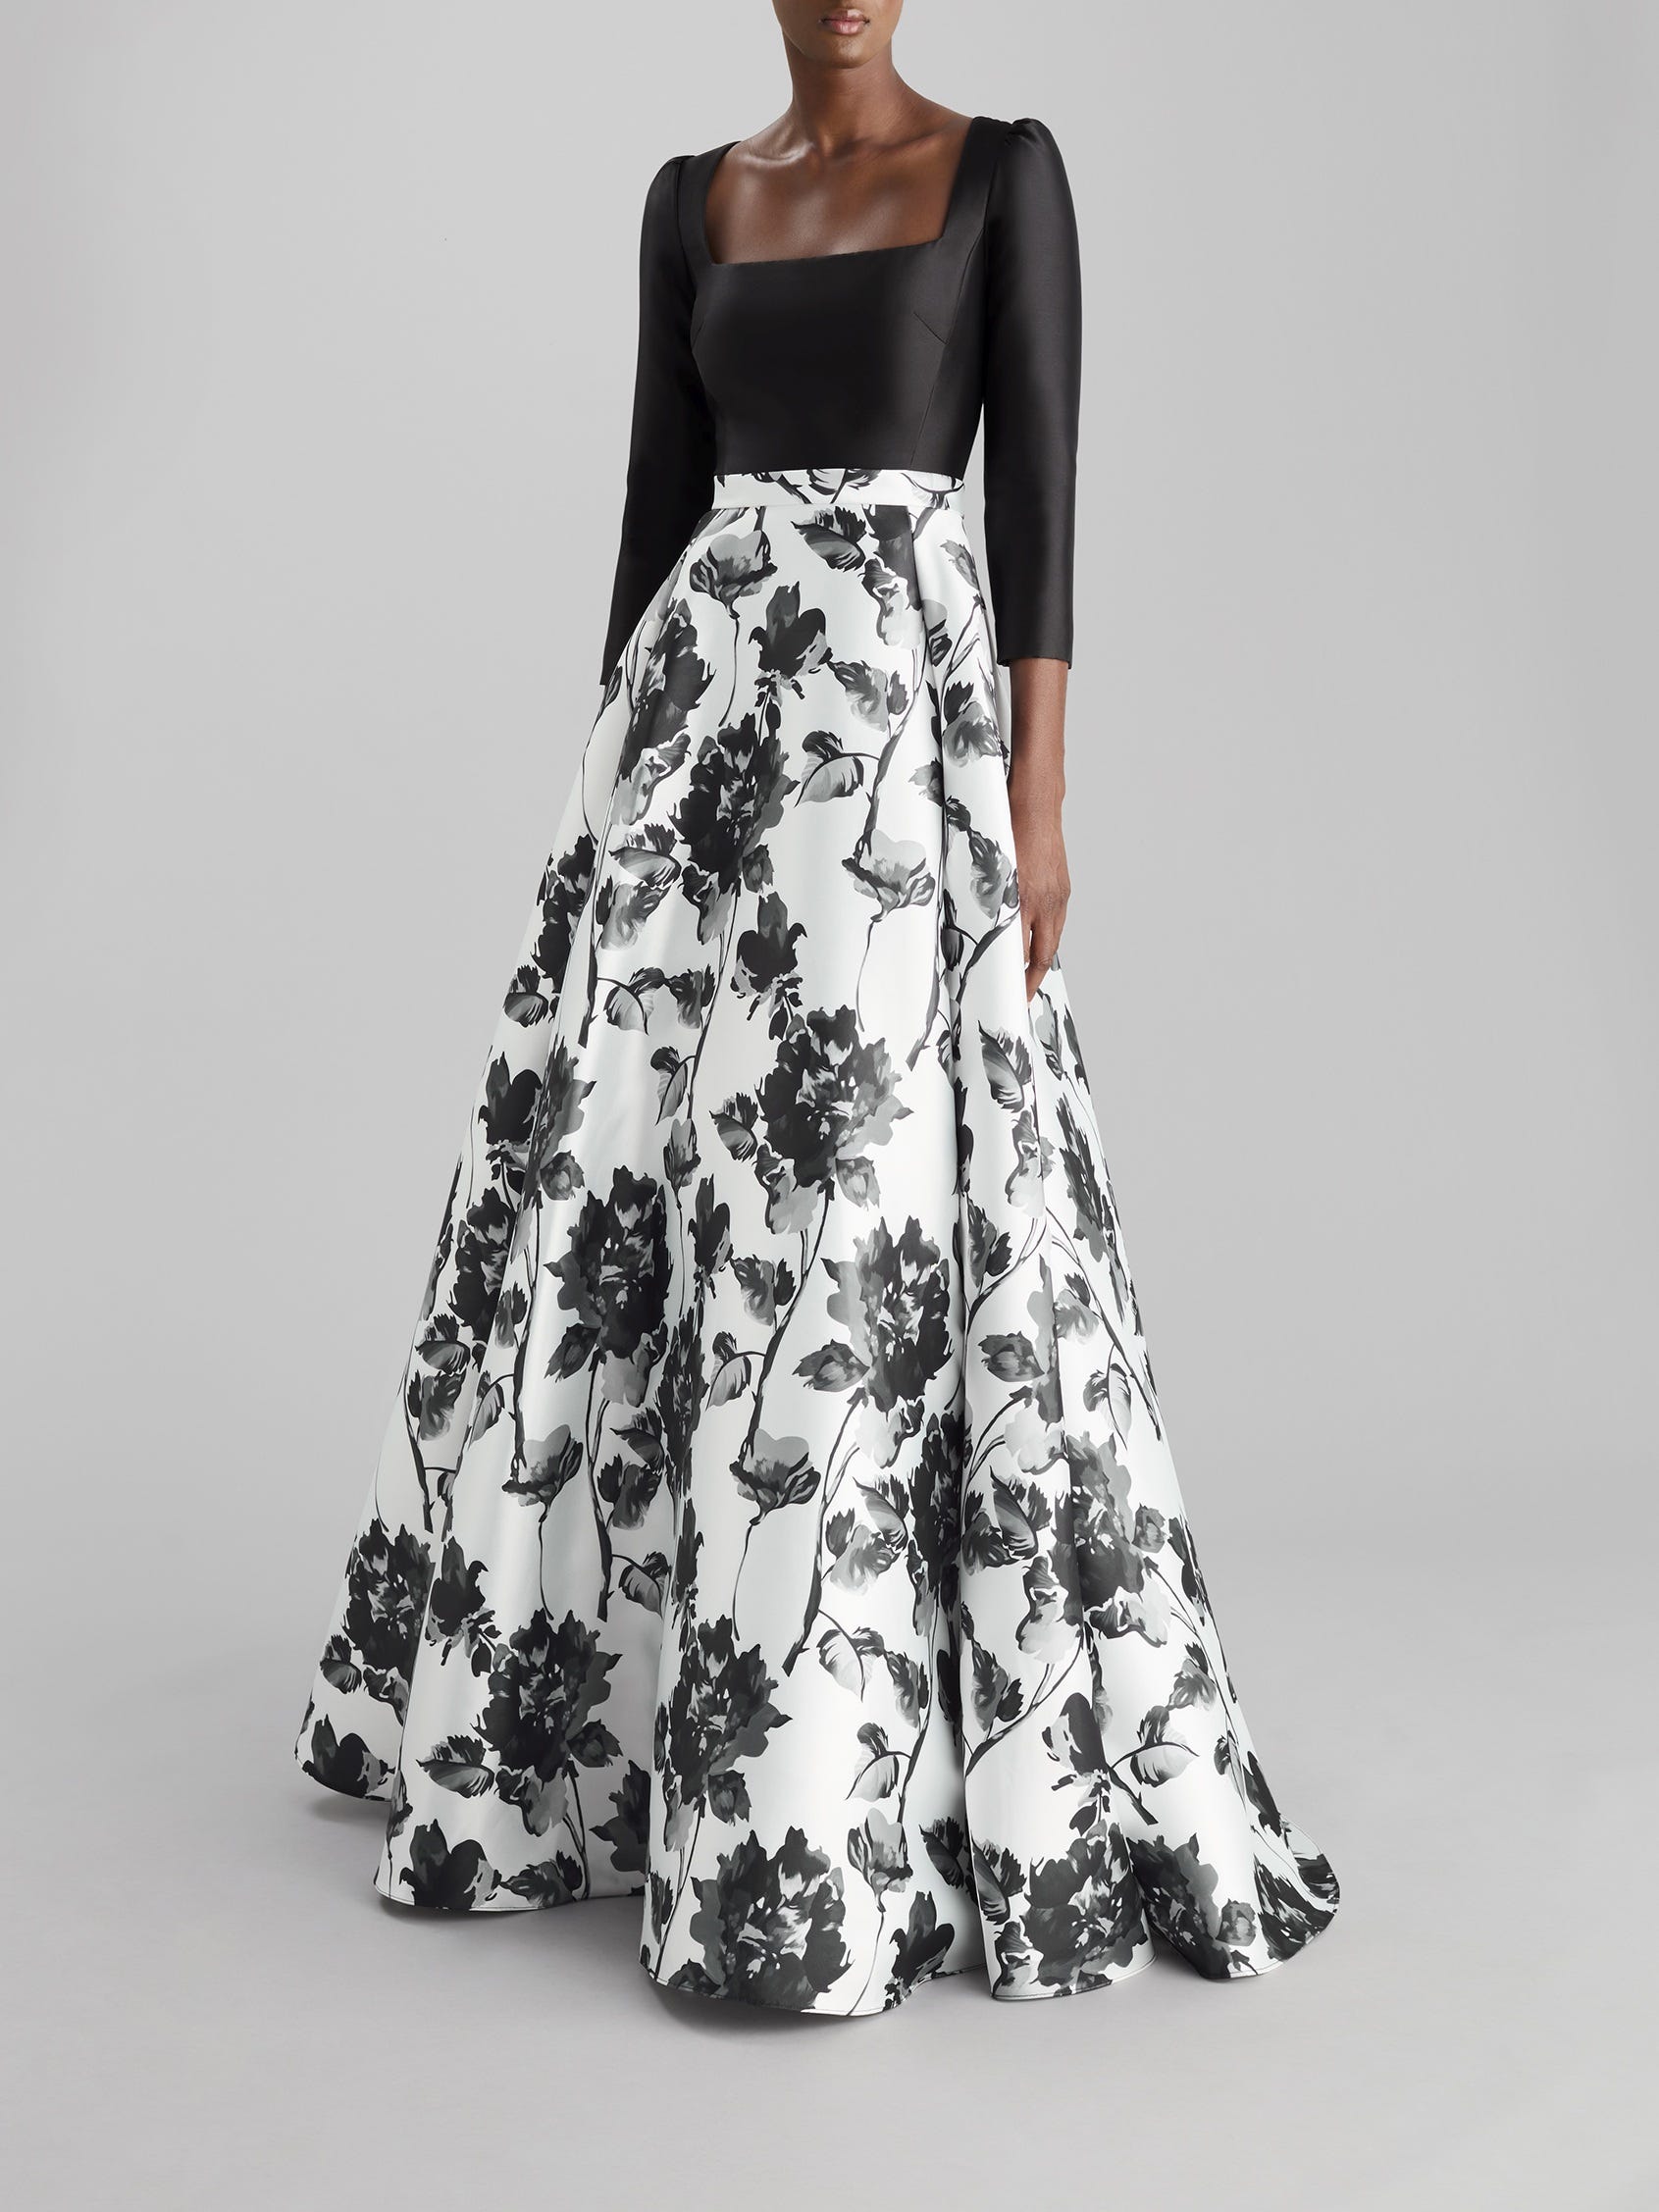 Carolina Herrera Black & White Embellished Yoke Dress - Queen Letizia  Dresses - Queen Letizia Style